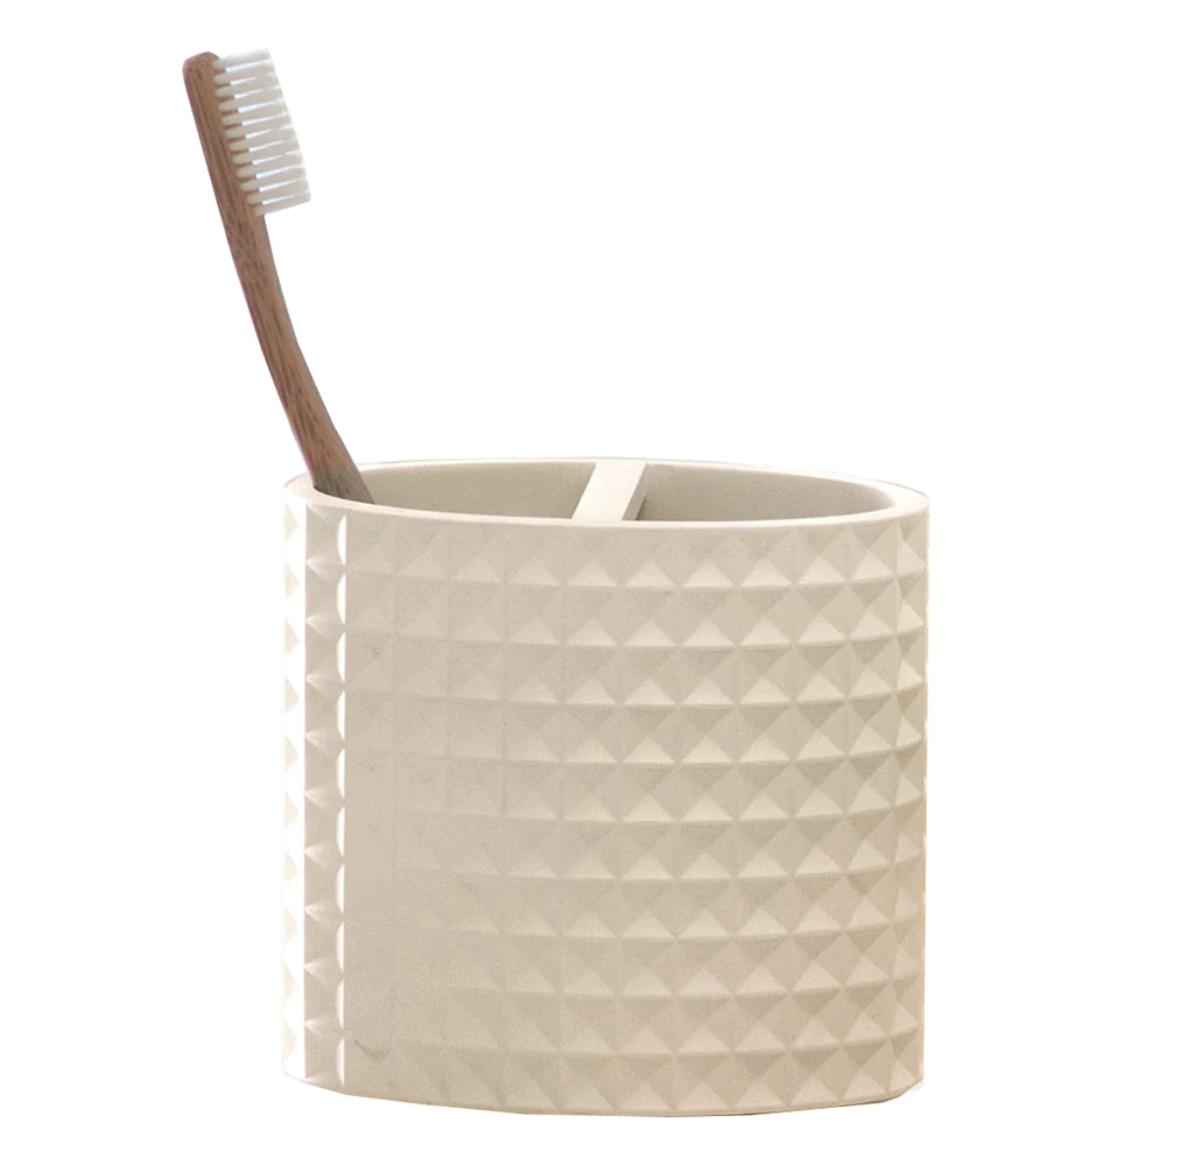 Moda Braemar Toothbrush Holder – Ivory